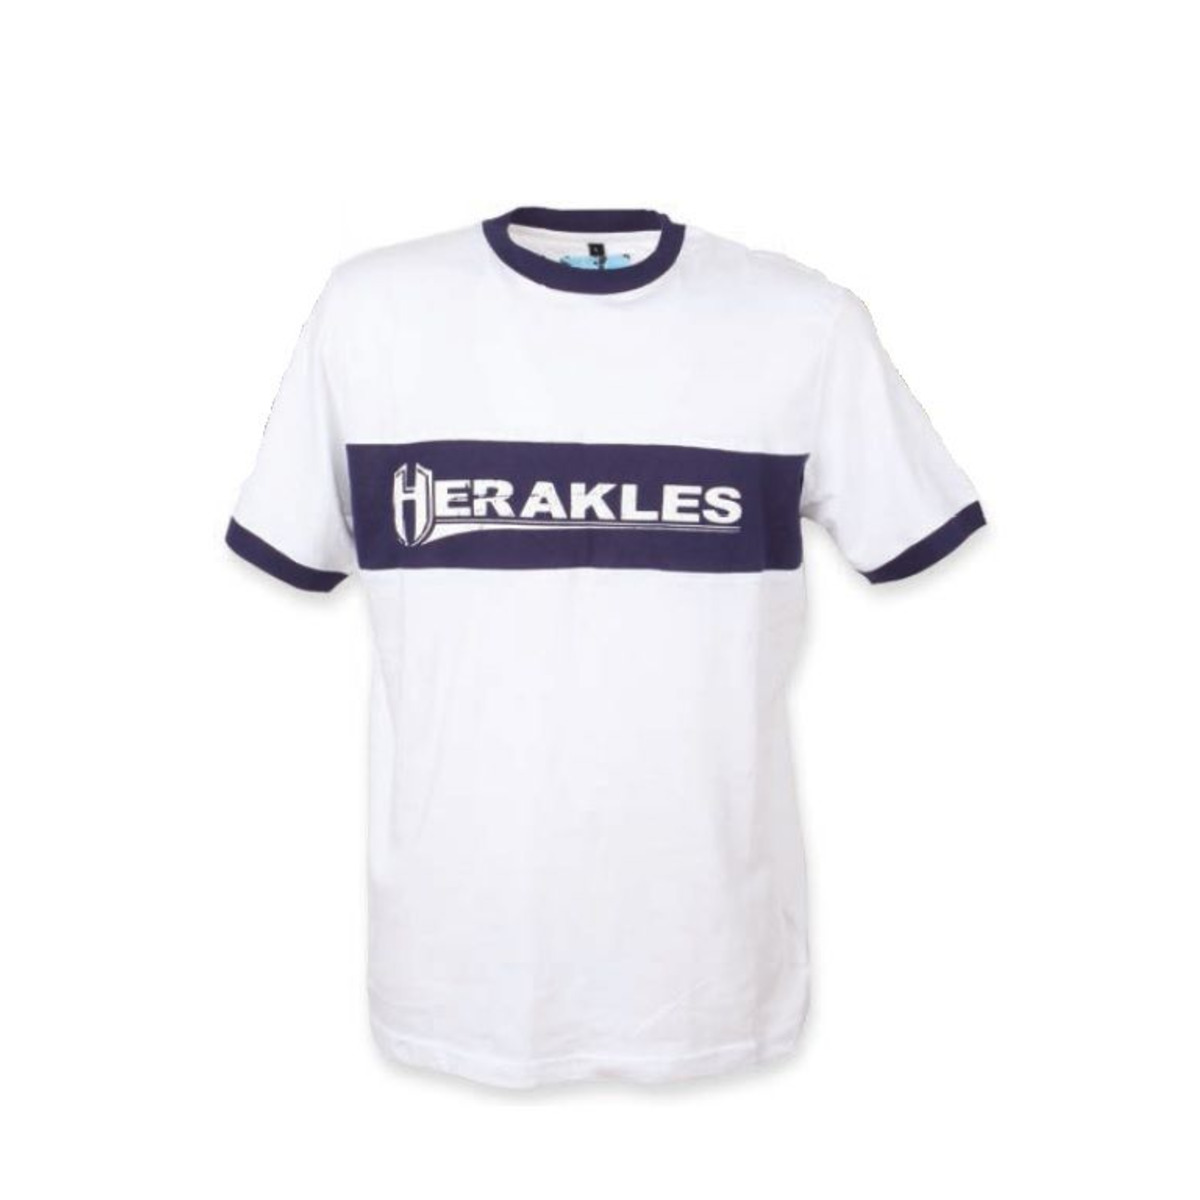 Herakles T-Shirt Blanc-Bleu - S